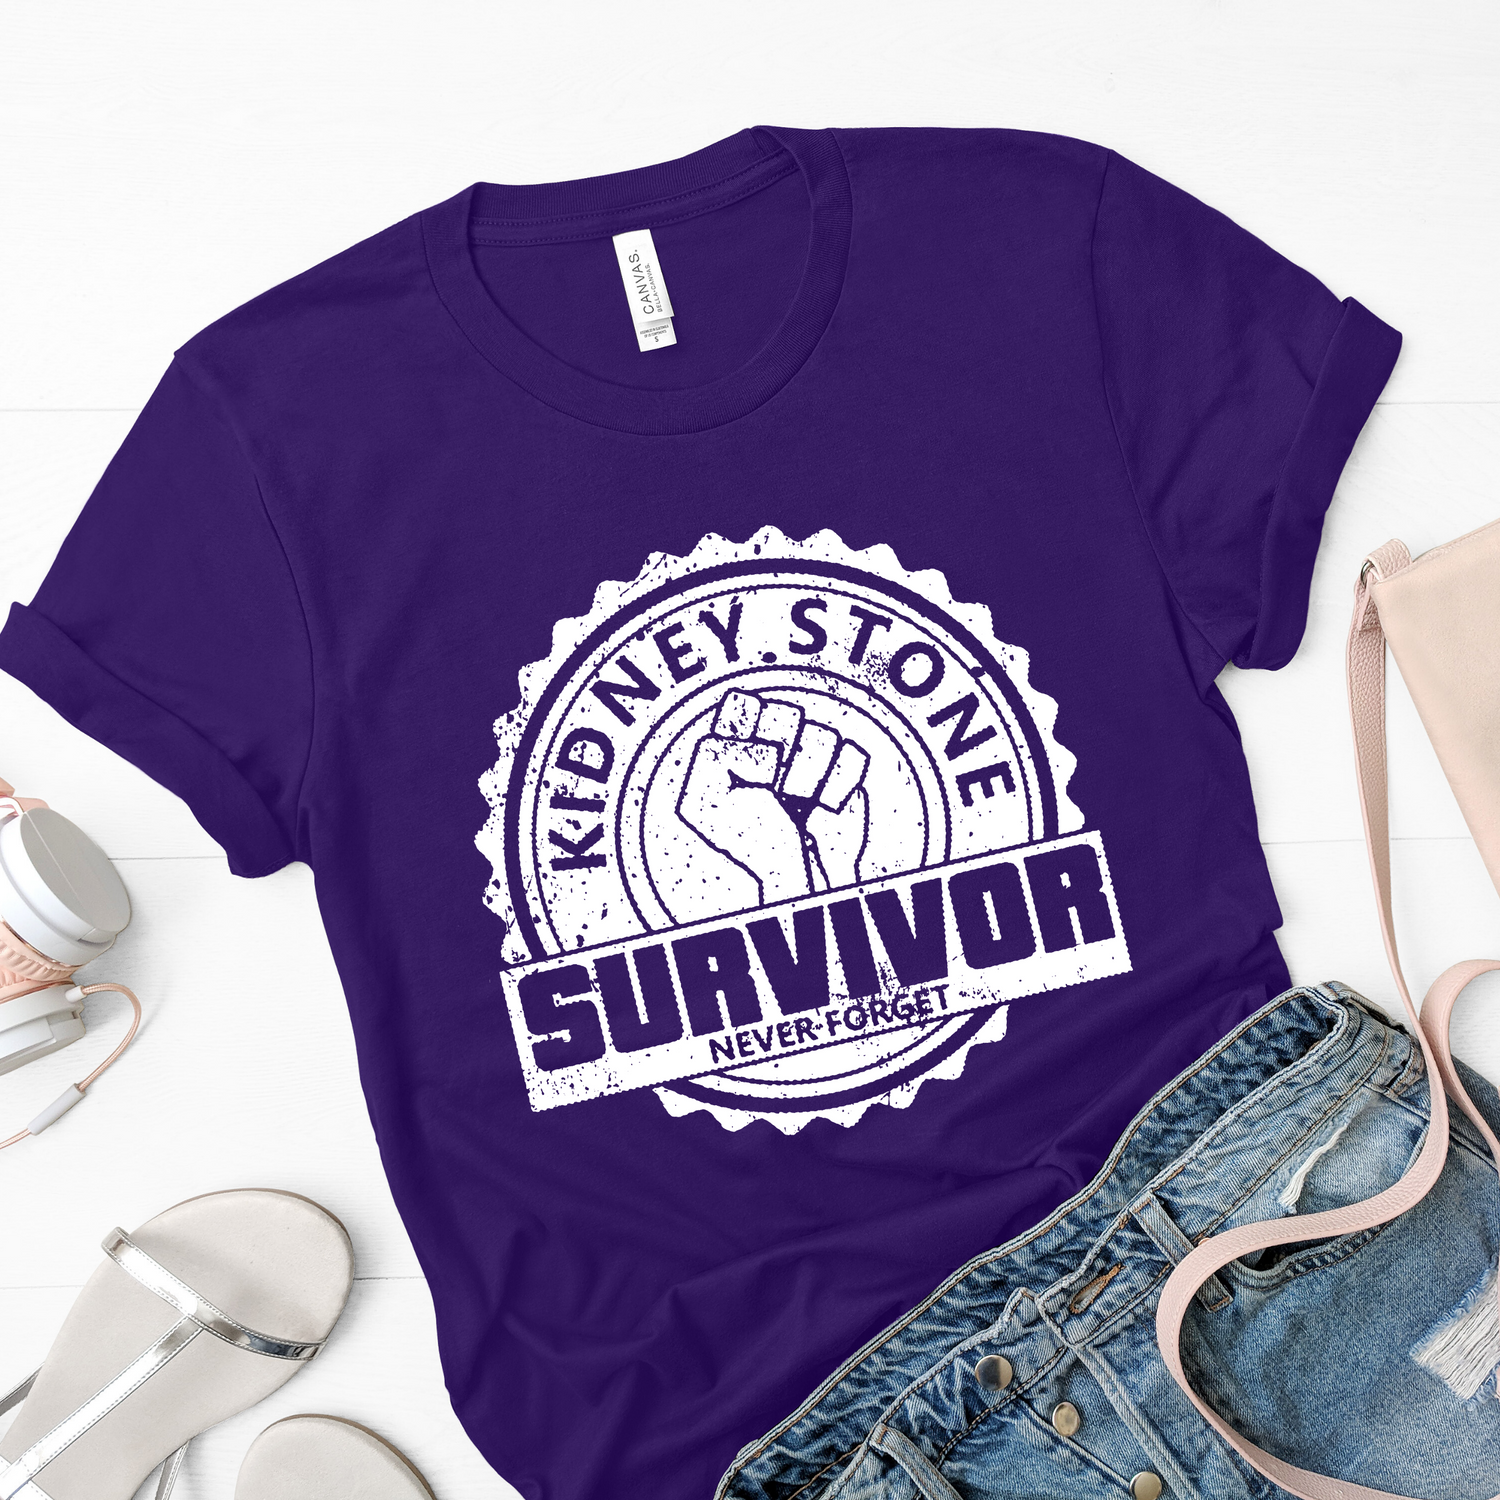 Kidney Stone Survivor Never Forget Motivational Inspirational Shirt - Teegarb